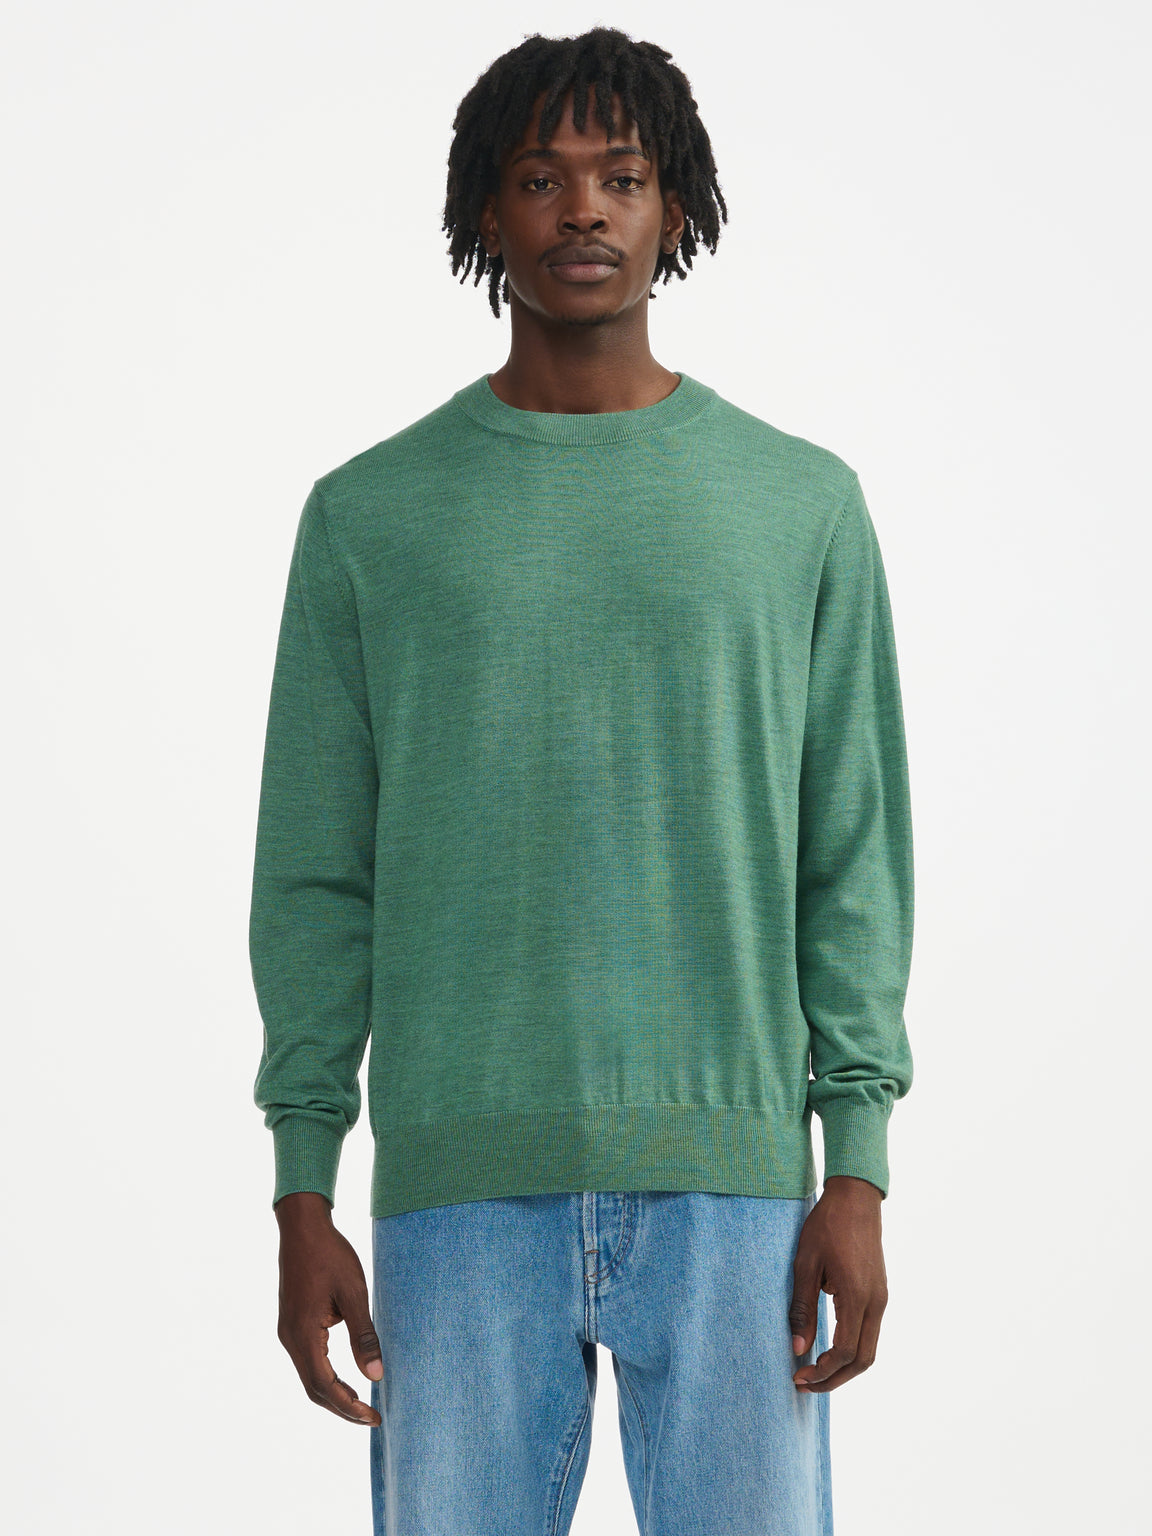 Dilliv Sweater - Green | Men Collection | Bellerose